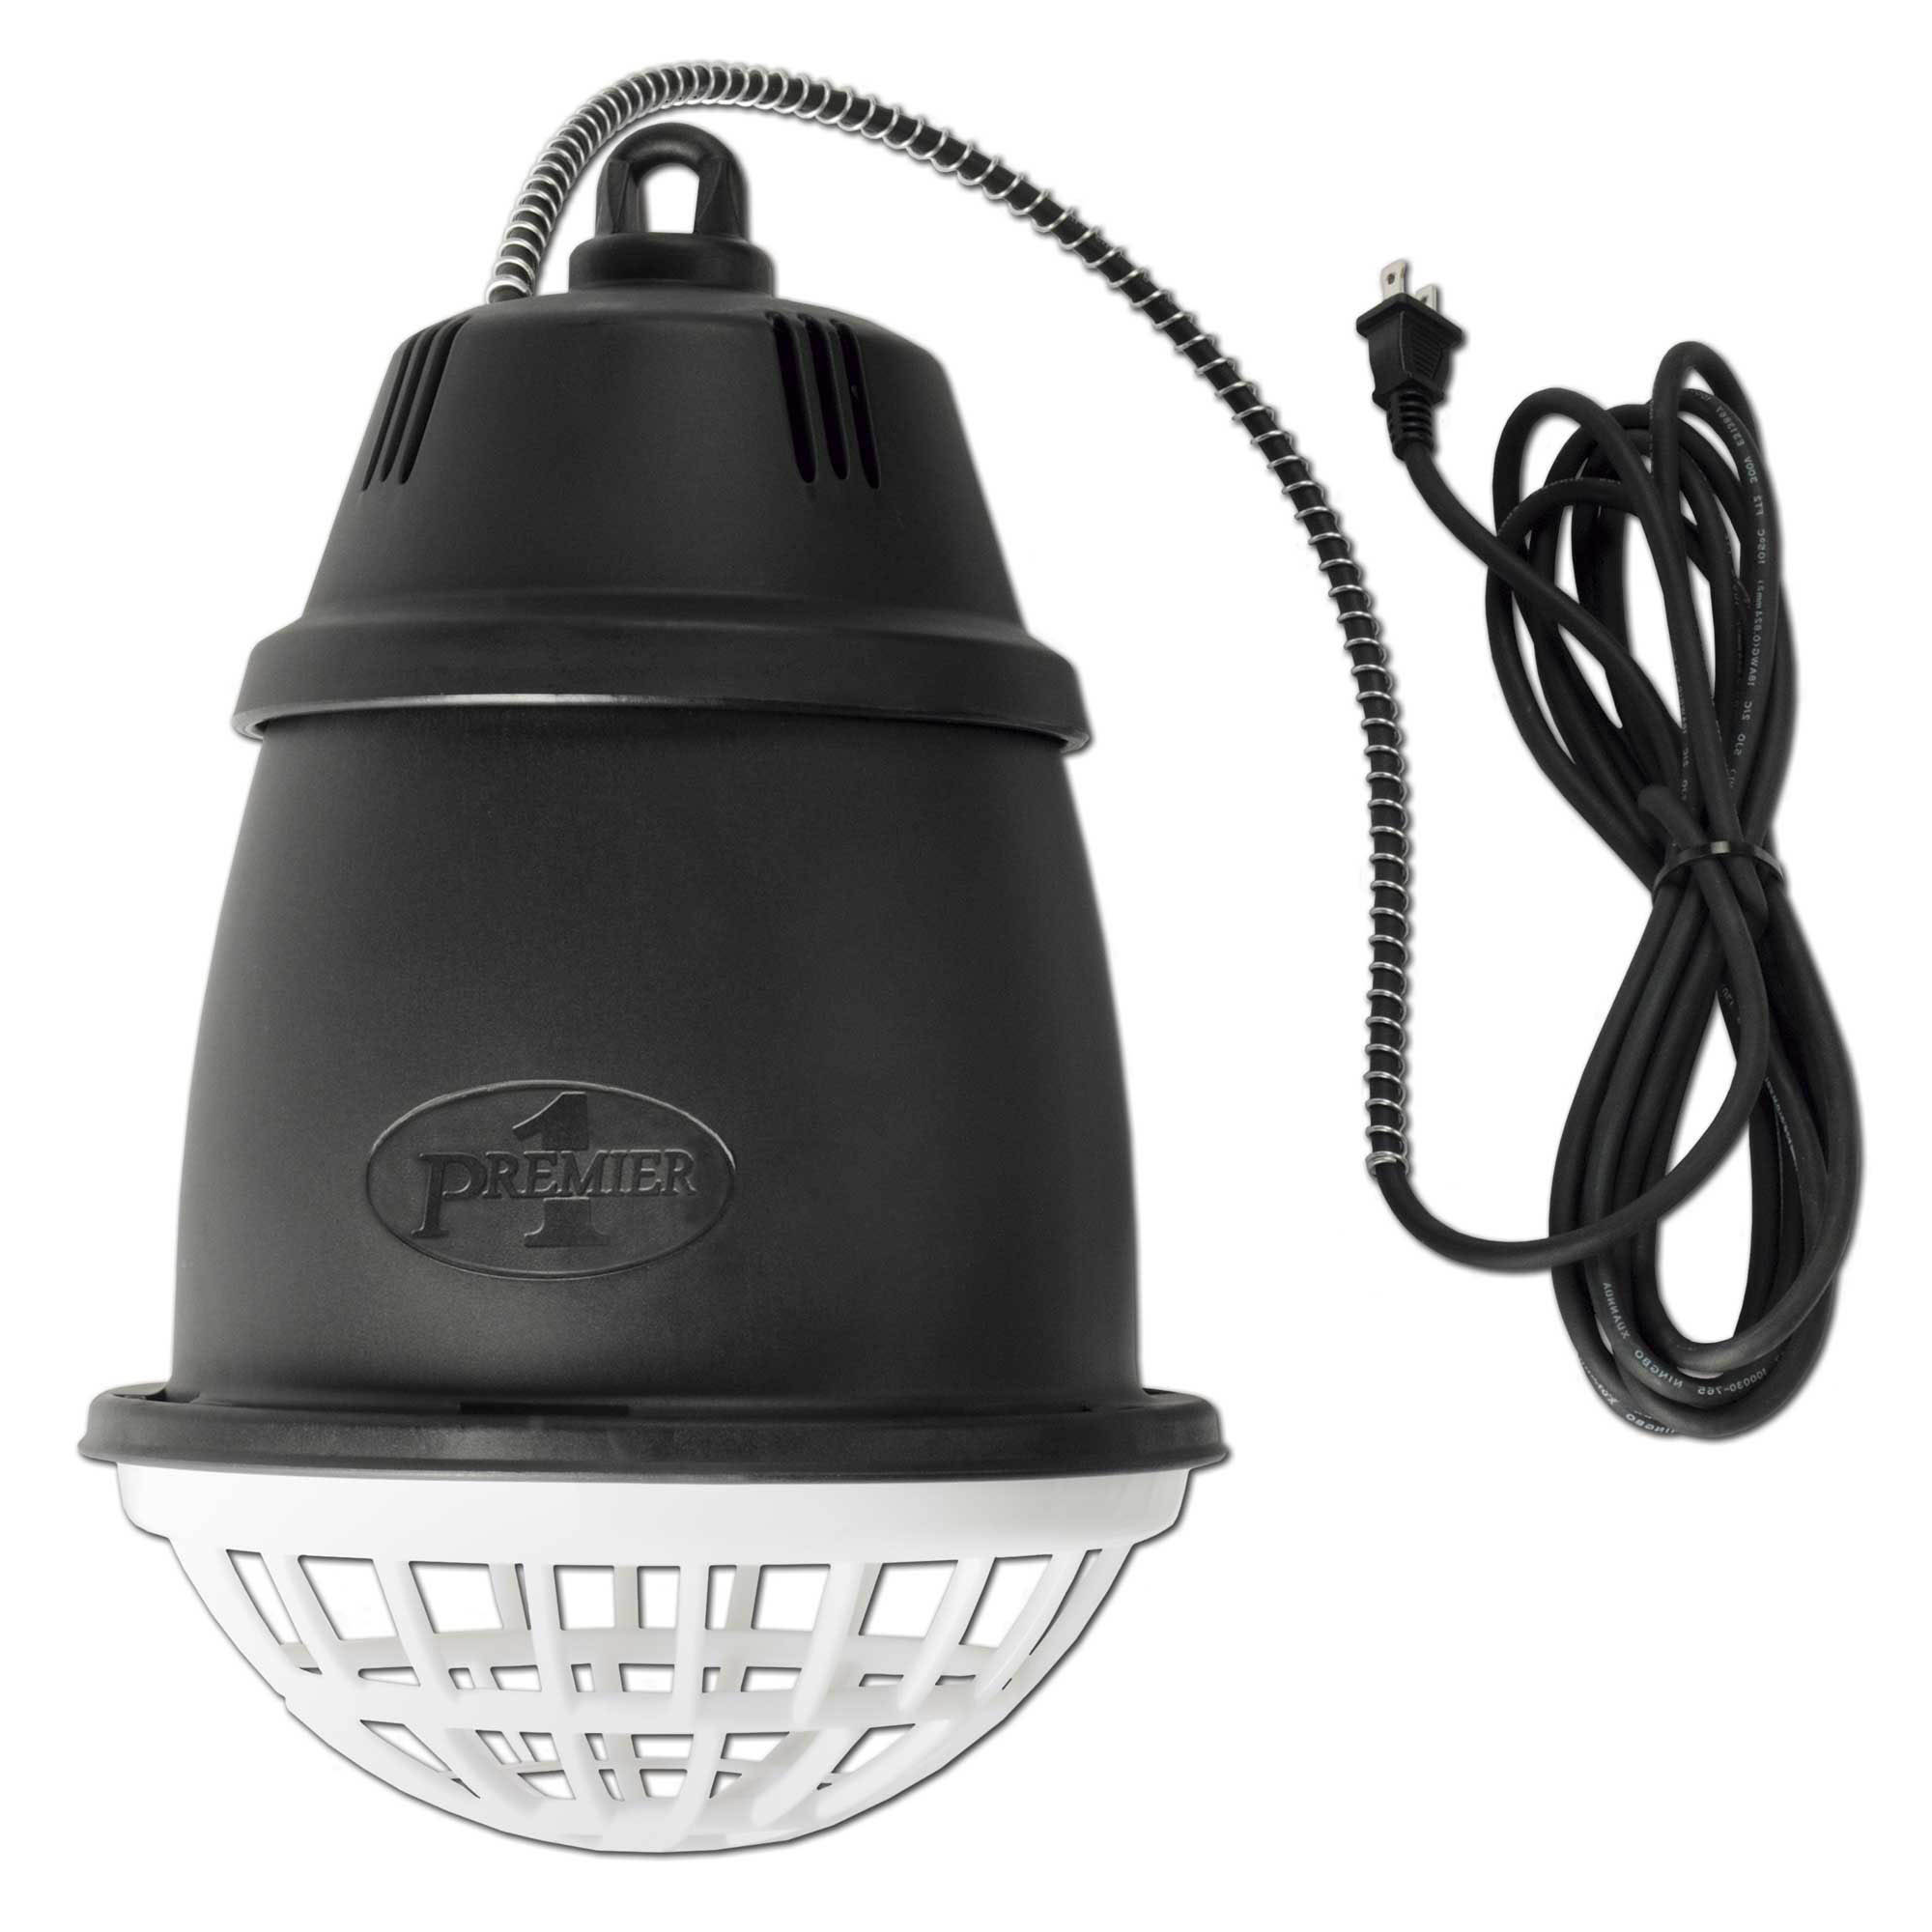 Premier Heat Lamp